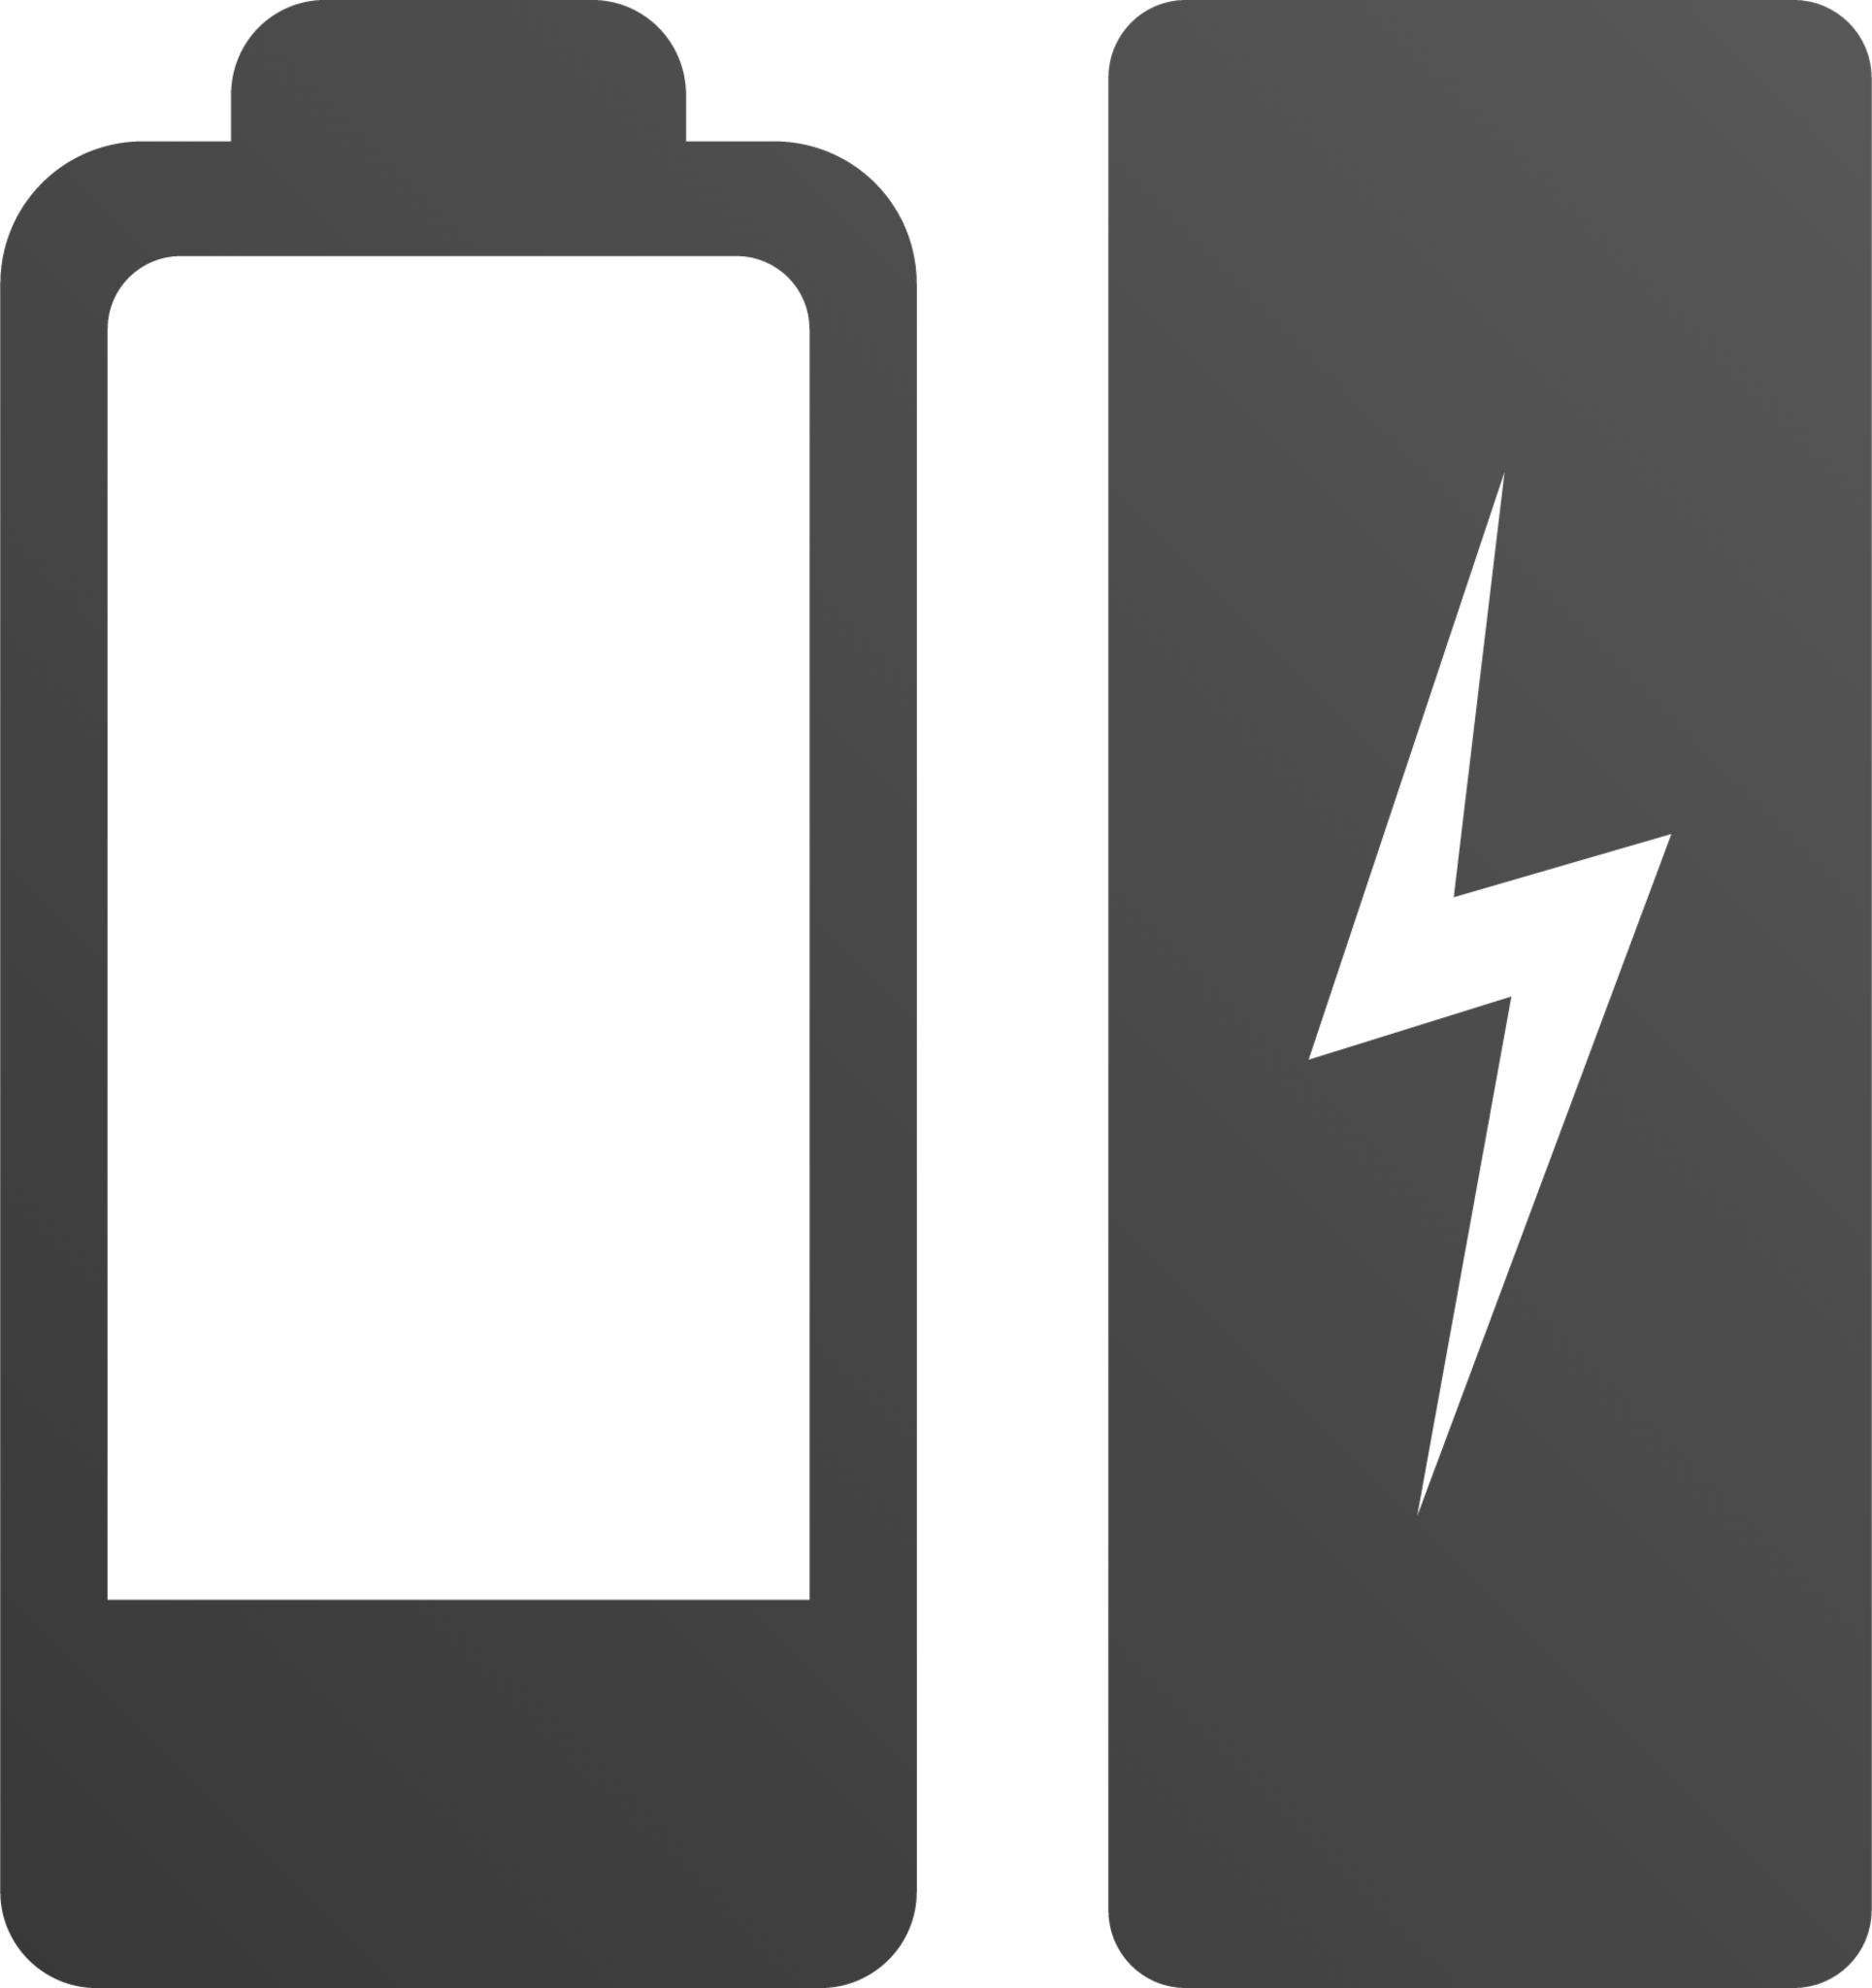 xfpm ups 020 charging icon